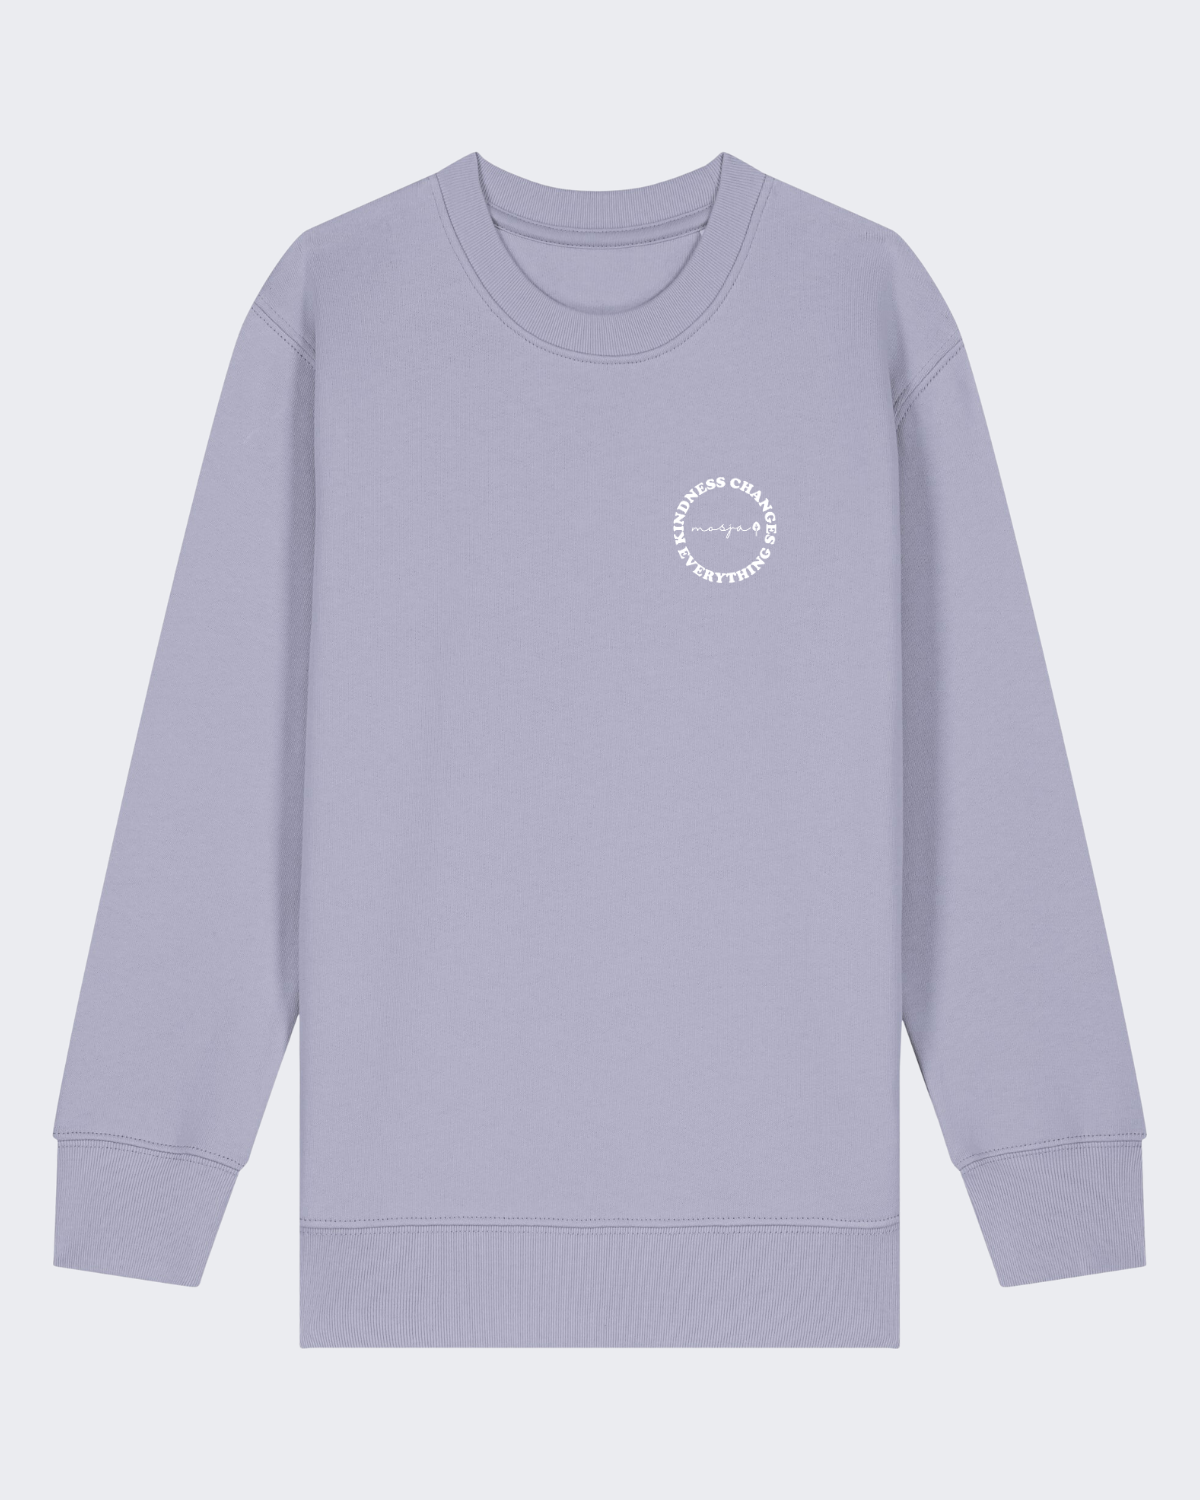 Kids-Sweater "Lavendel" -  Kindness